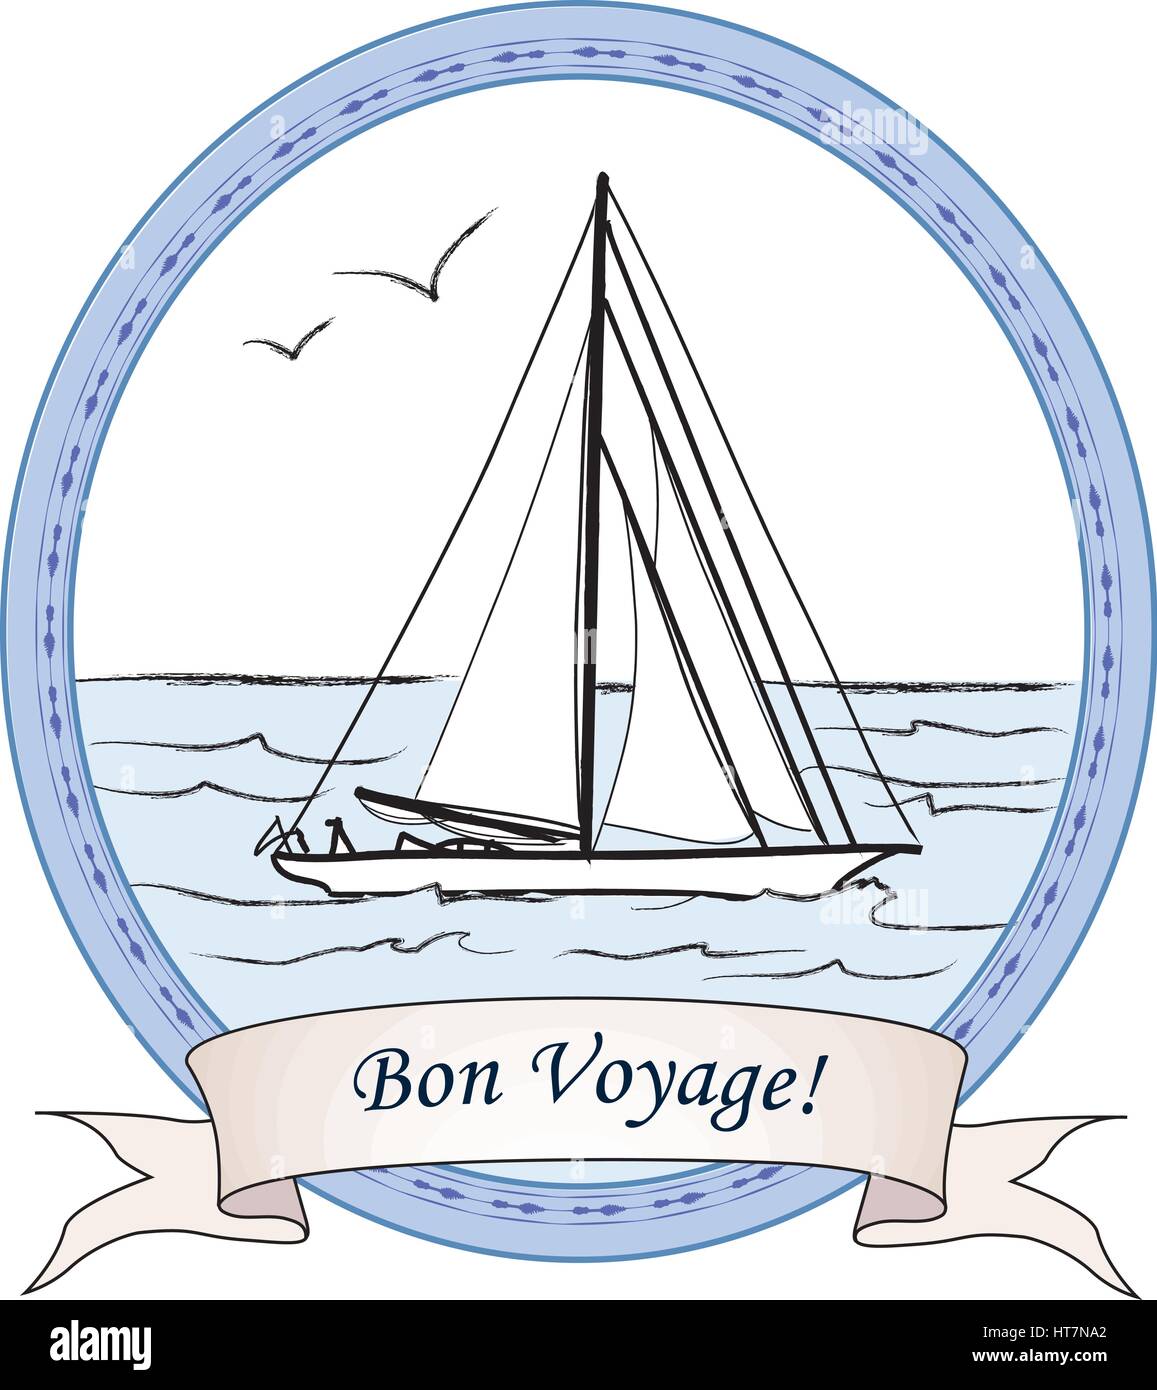 Bon voyage Vintage Travel Card. Yachtcharter im Ozean Banner. nautische Meer Symbol. Vector Illustration Skizze der Boot im Meer. Stock Vektor